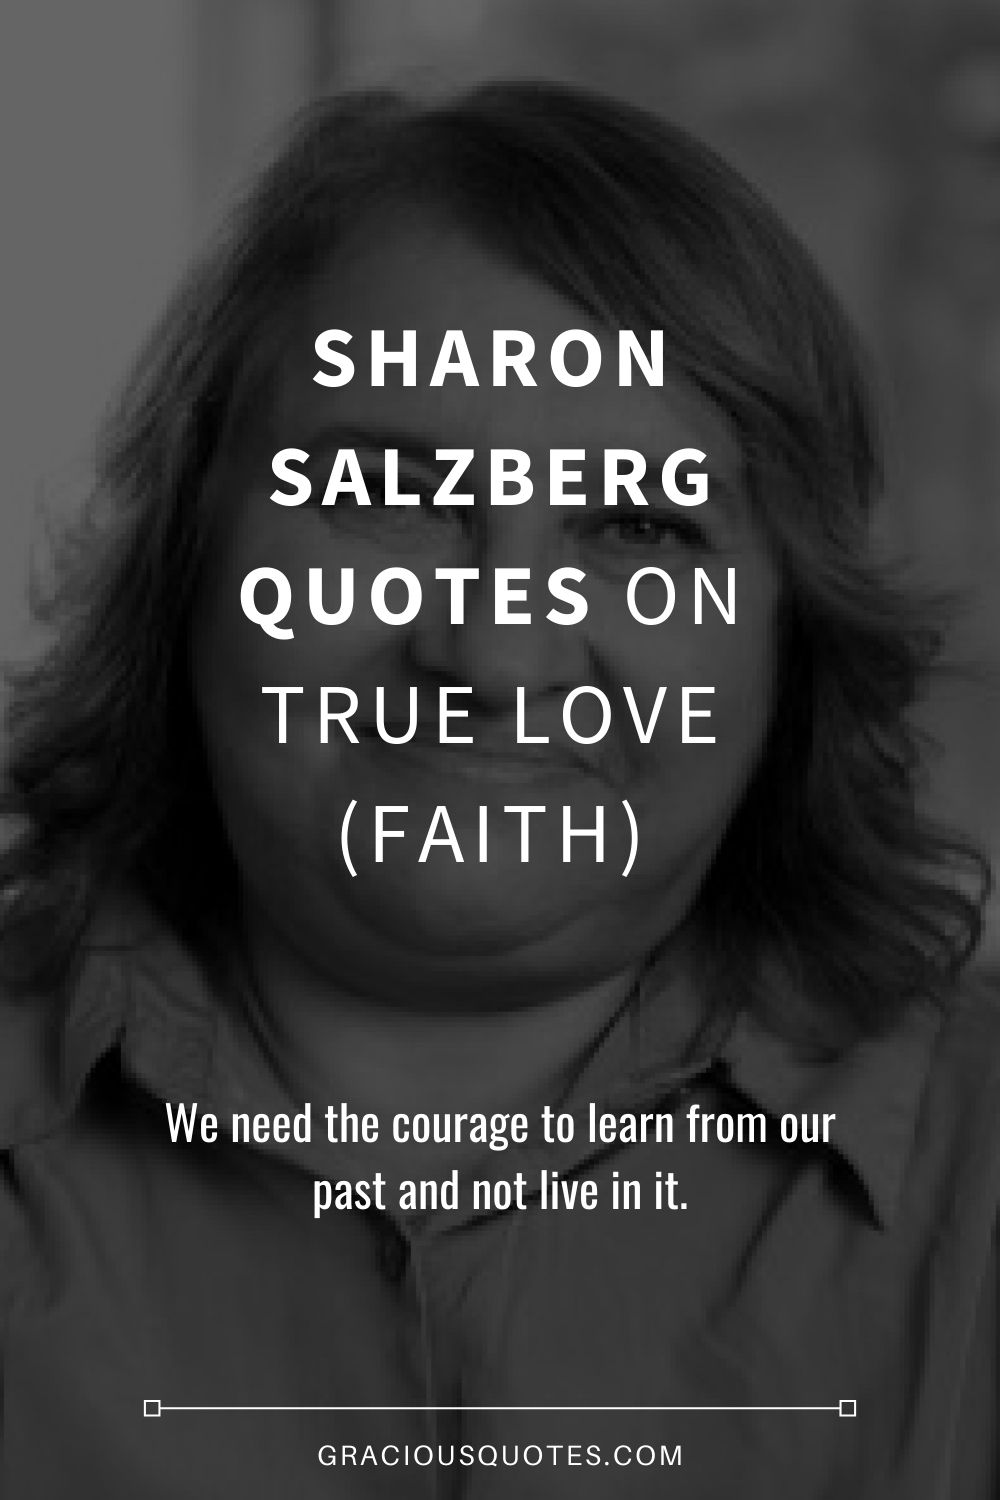 Sharon Salzberg Quotes on True Love (FAITH) - Gracious Quotes